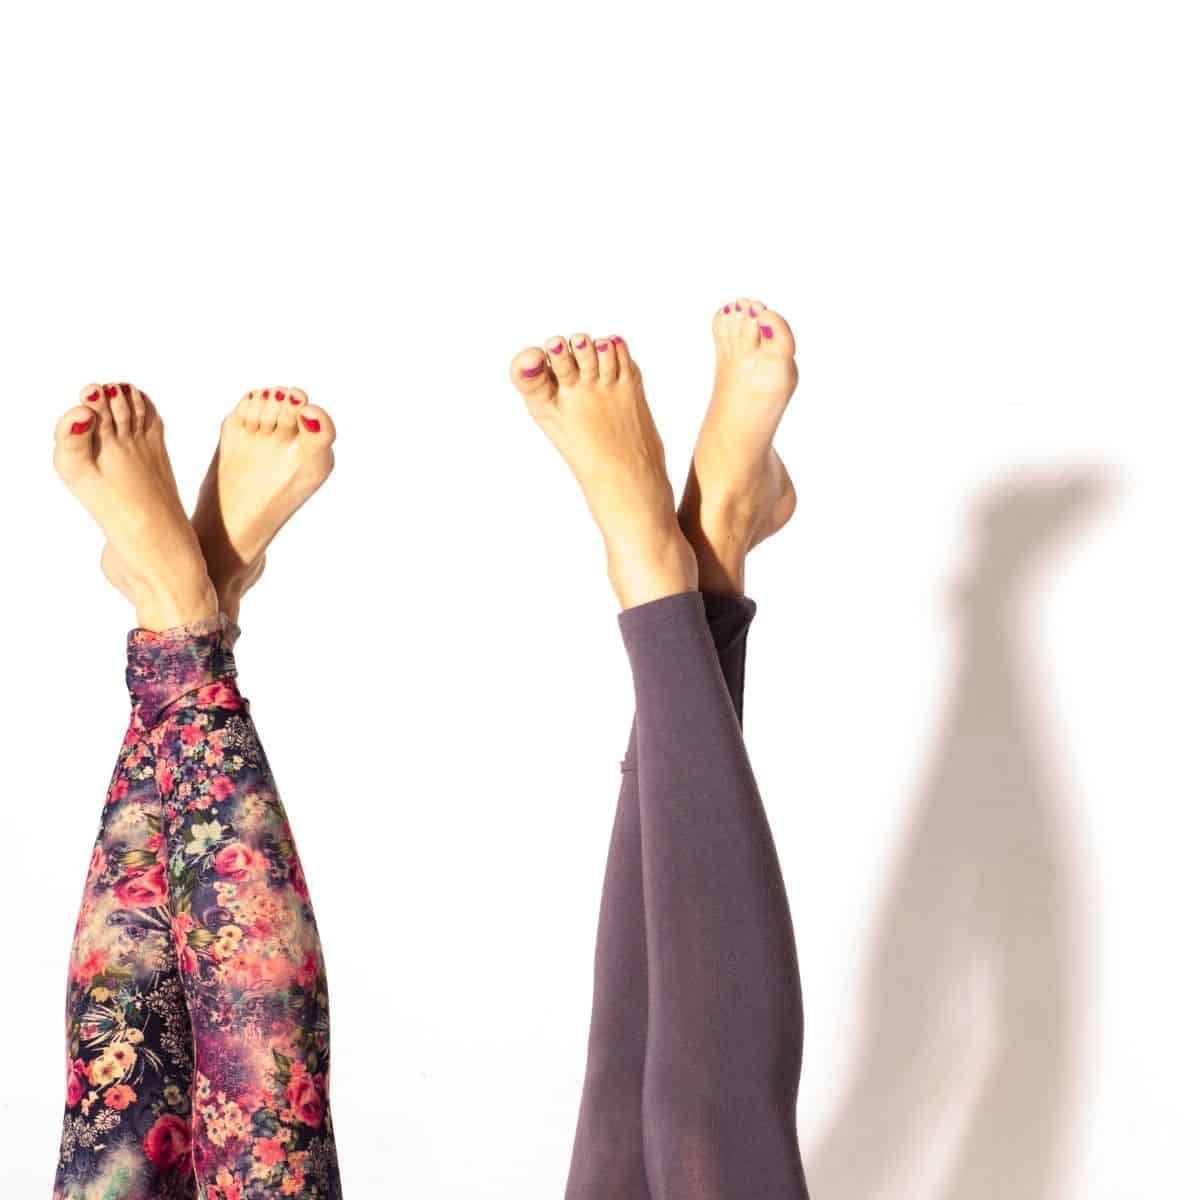 Two feet upside down wearing postpartum leggings.